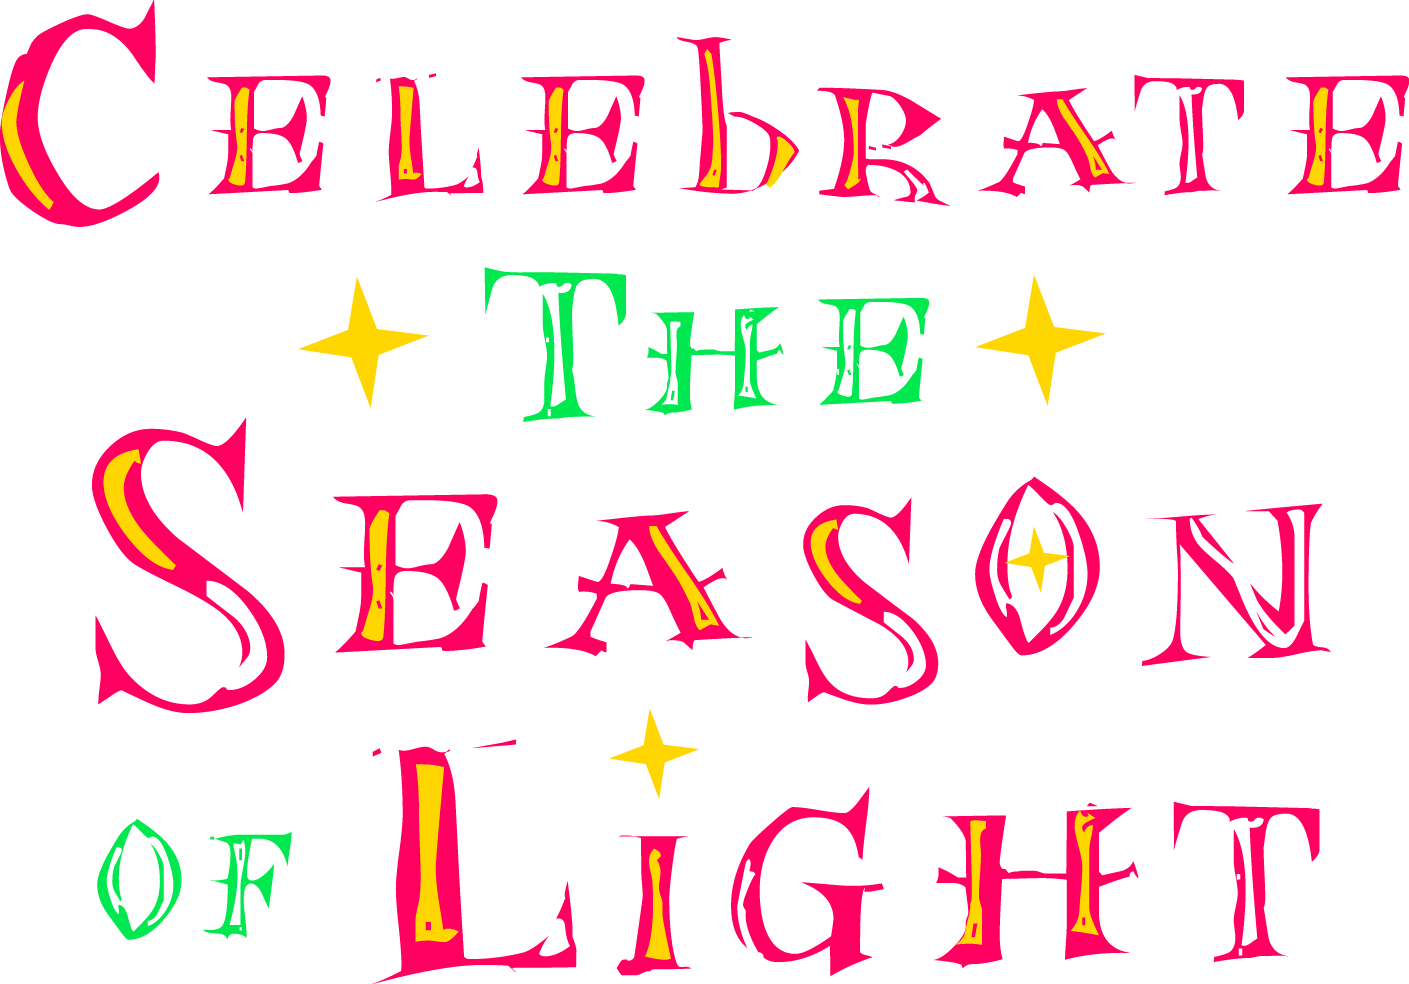 ~~Celebrate the Season of Light ~~